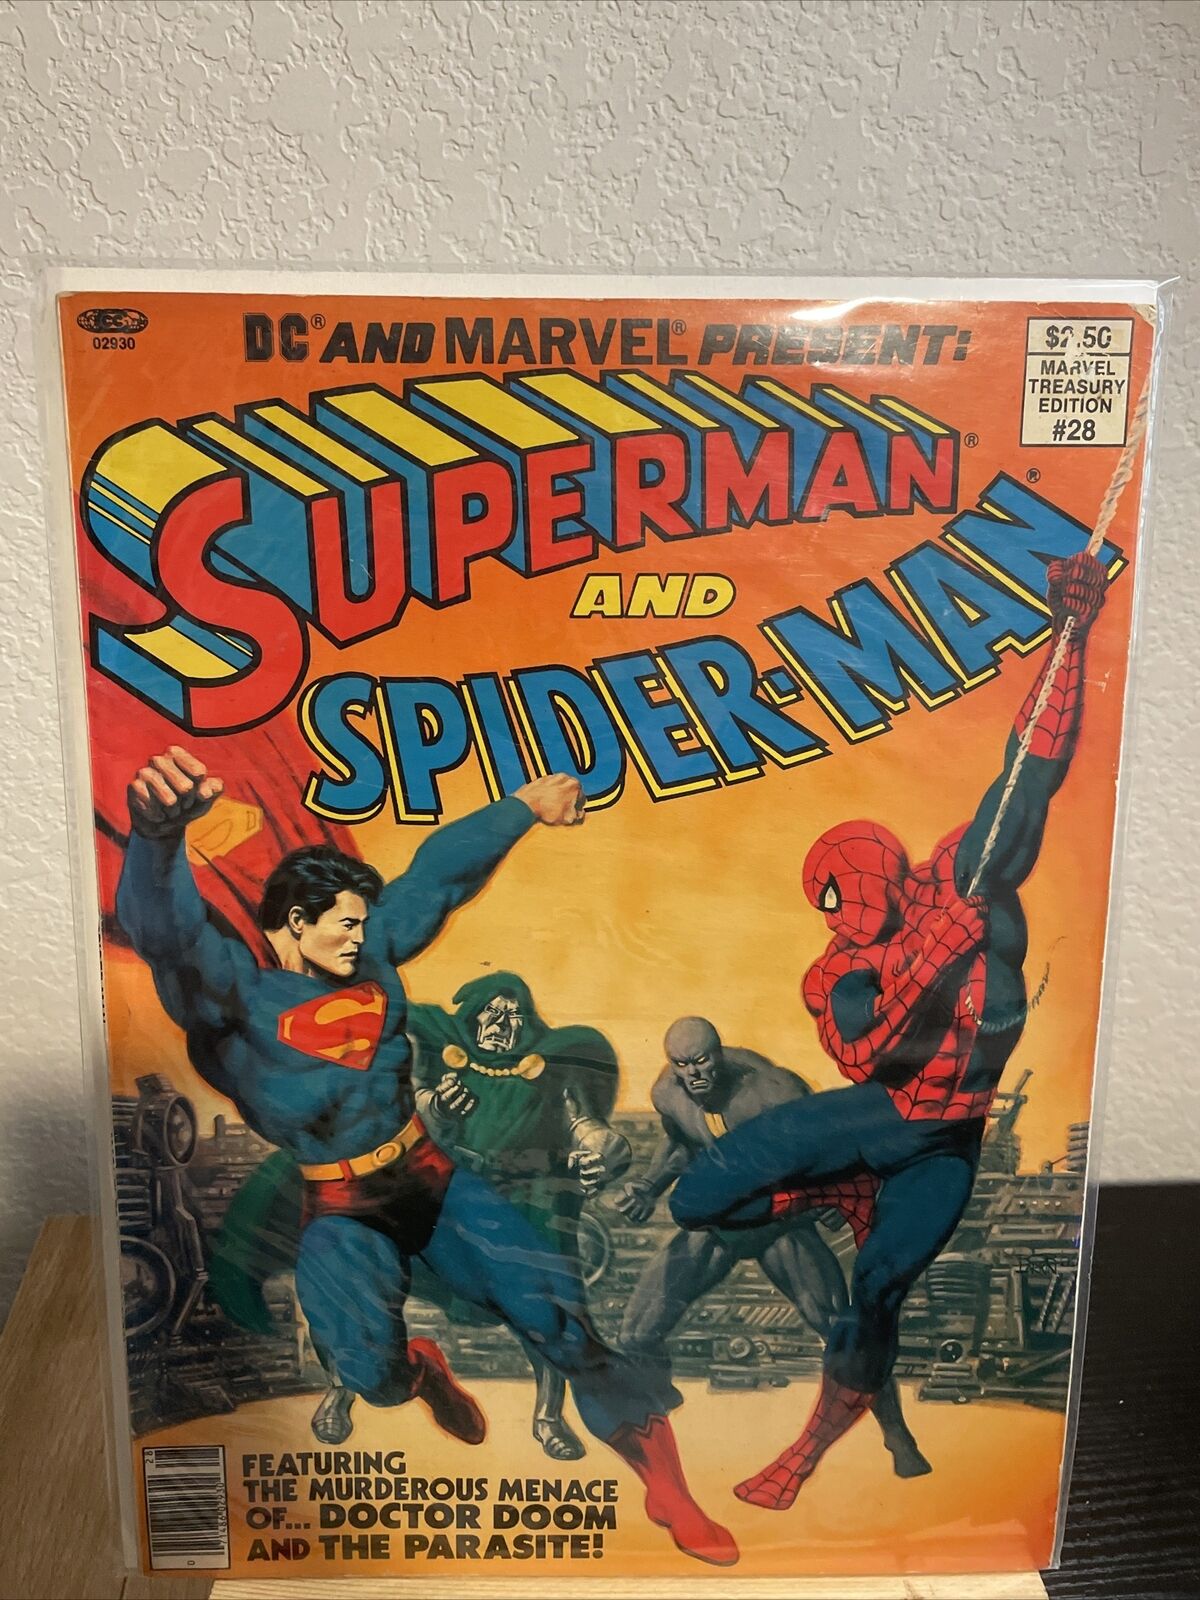 Marvel Treasury Edition 28 DC And Marvel Present Superman And Spiderman 1981